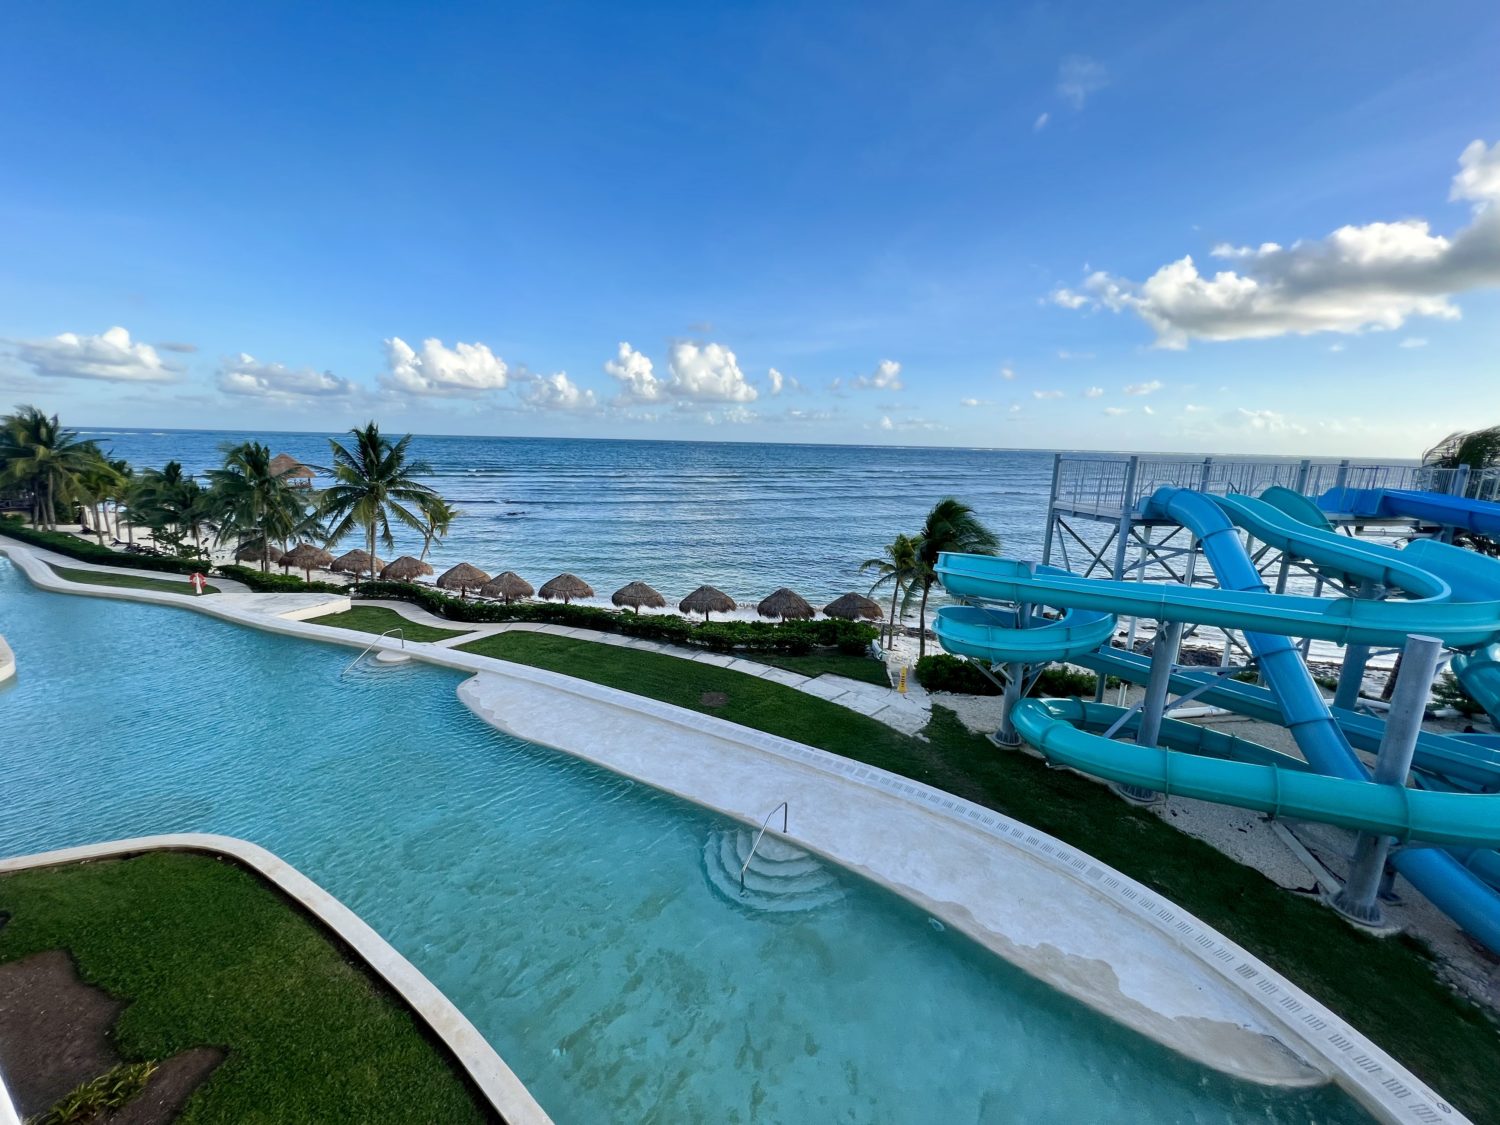 Hyatt Ziva Riviera Cancún A Review Of Hyatt S Newest All Inclusive Resort In Mexico